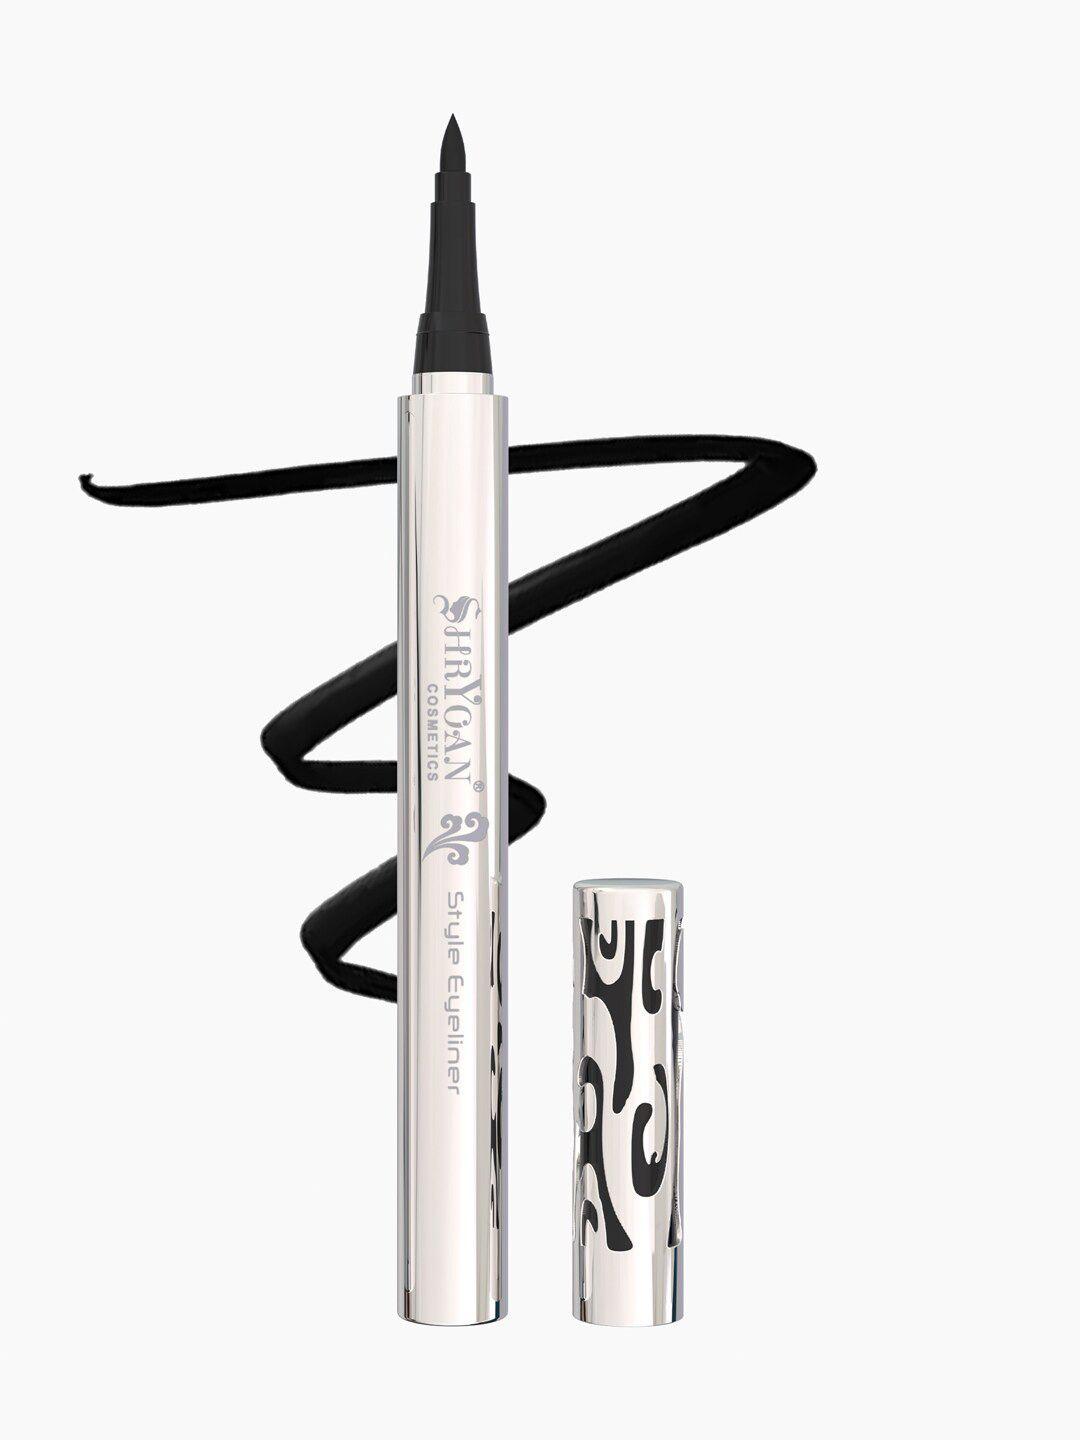 shryoan style long lasting eyeliner pen - 1.25g - black